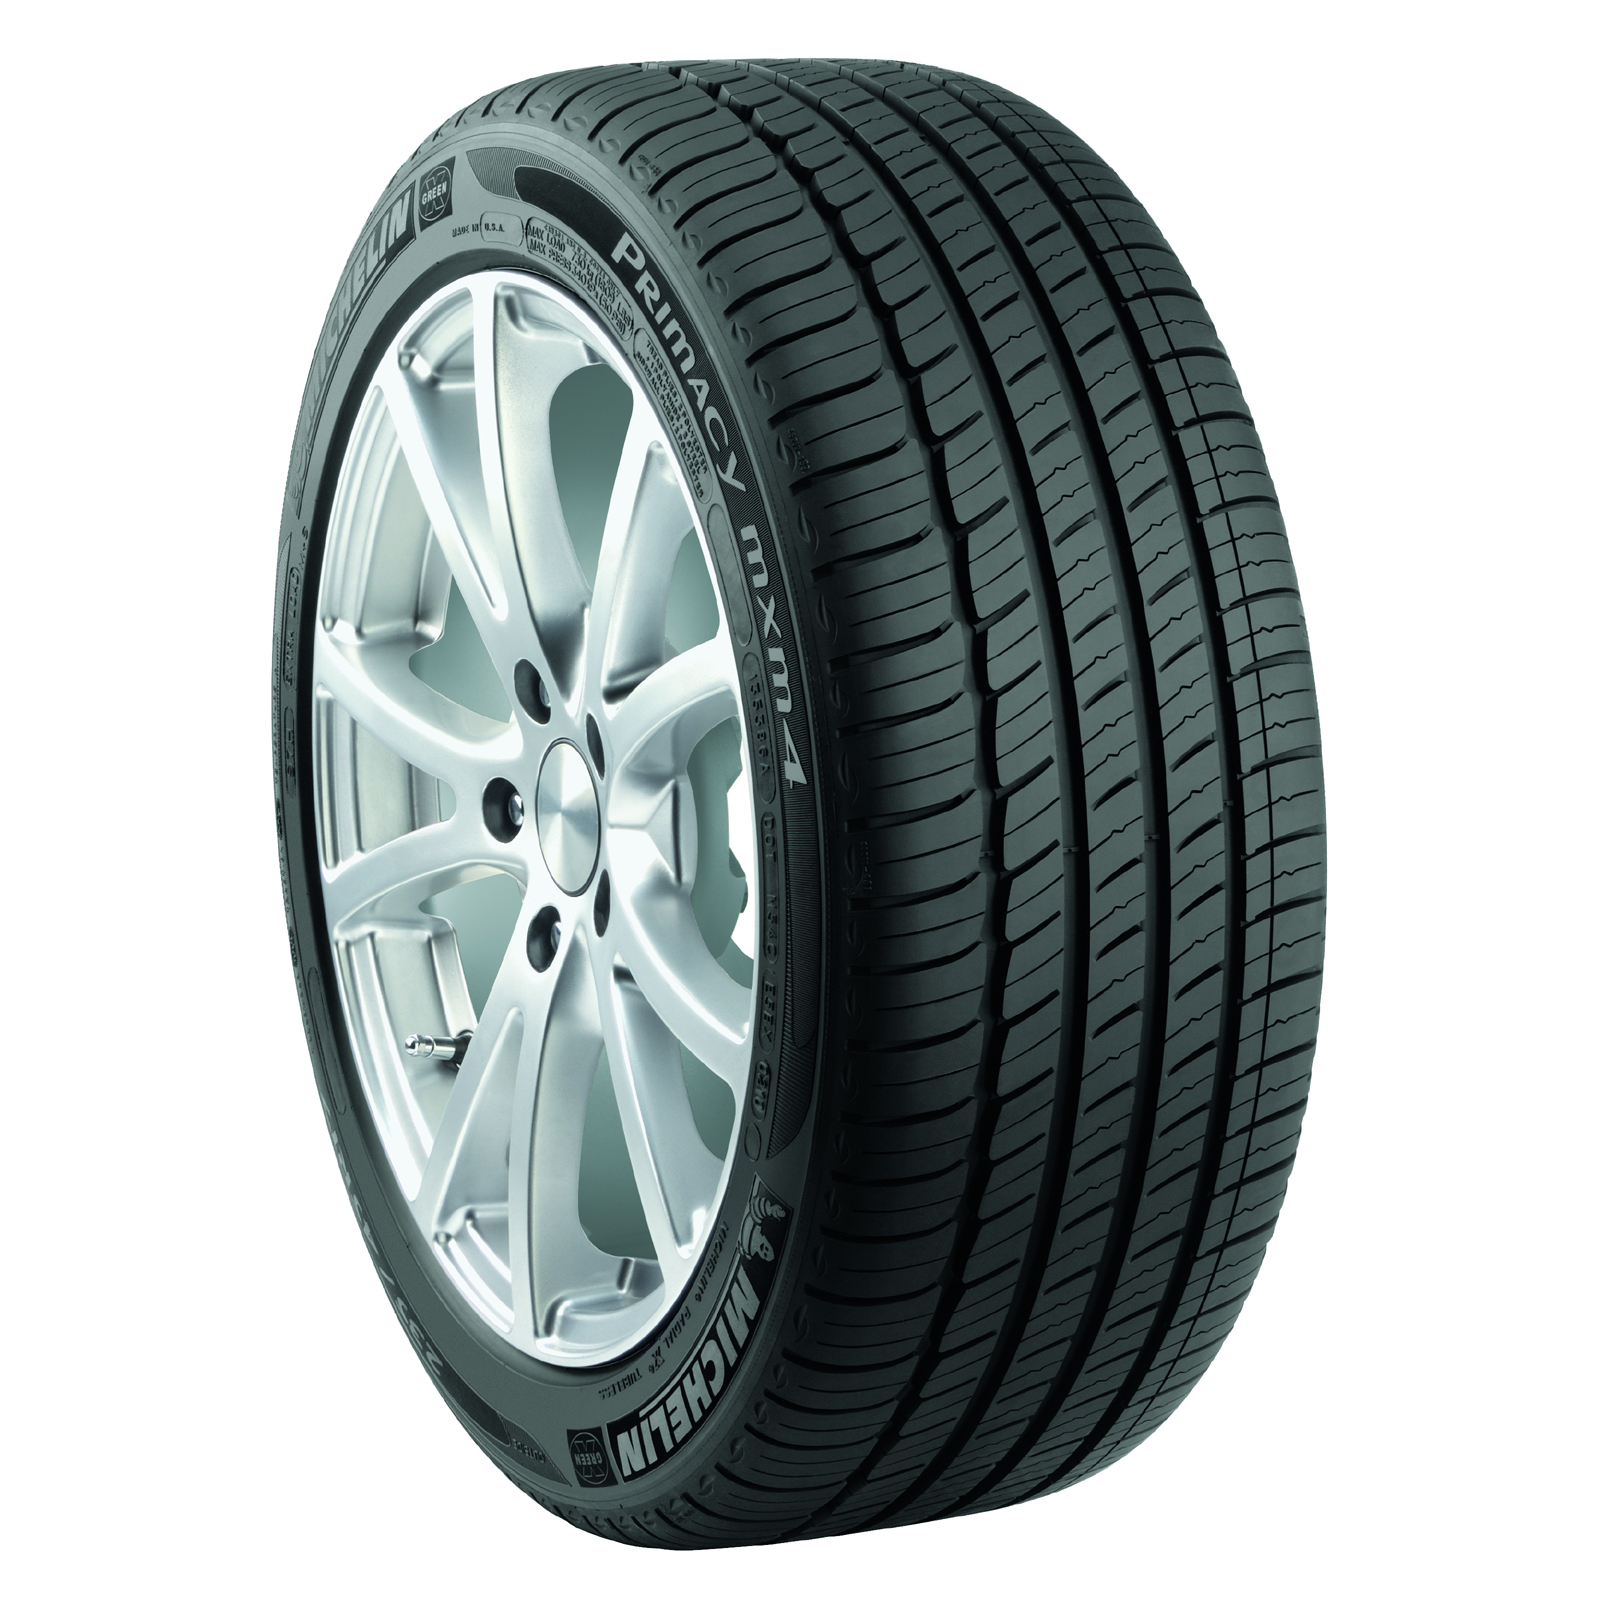 Michelin Primacy MXM4 235/45R18 All Season Tire Automotive Tires